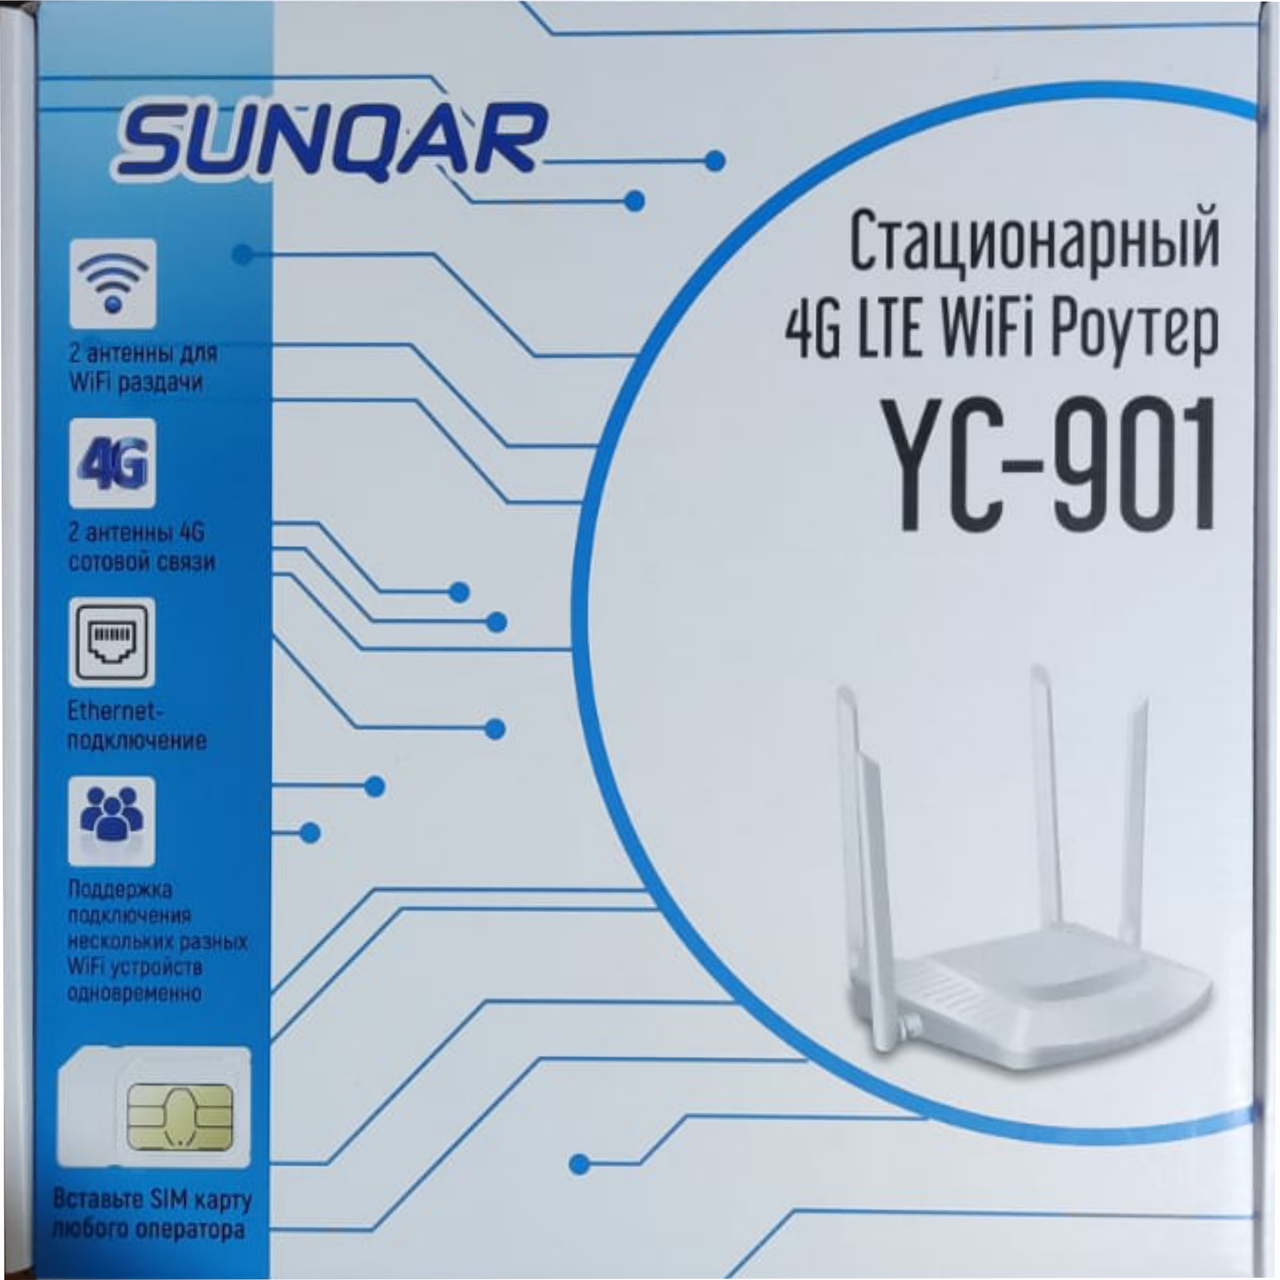 YC-901 Модем 4G 3G LTE WiFi роутер беспроводной 300 мб/с SIM карты СИМ Tele2 Билайн Актив Kcell Altel, фото 1